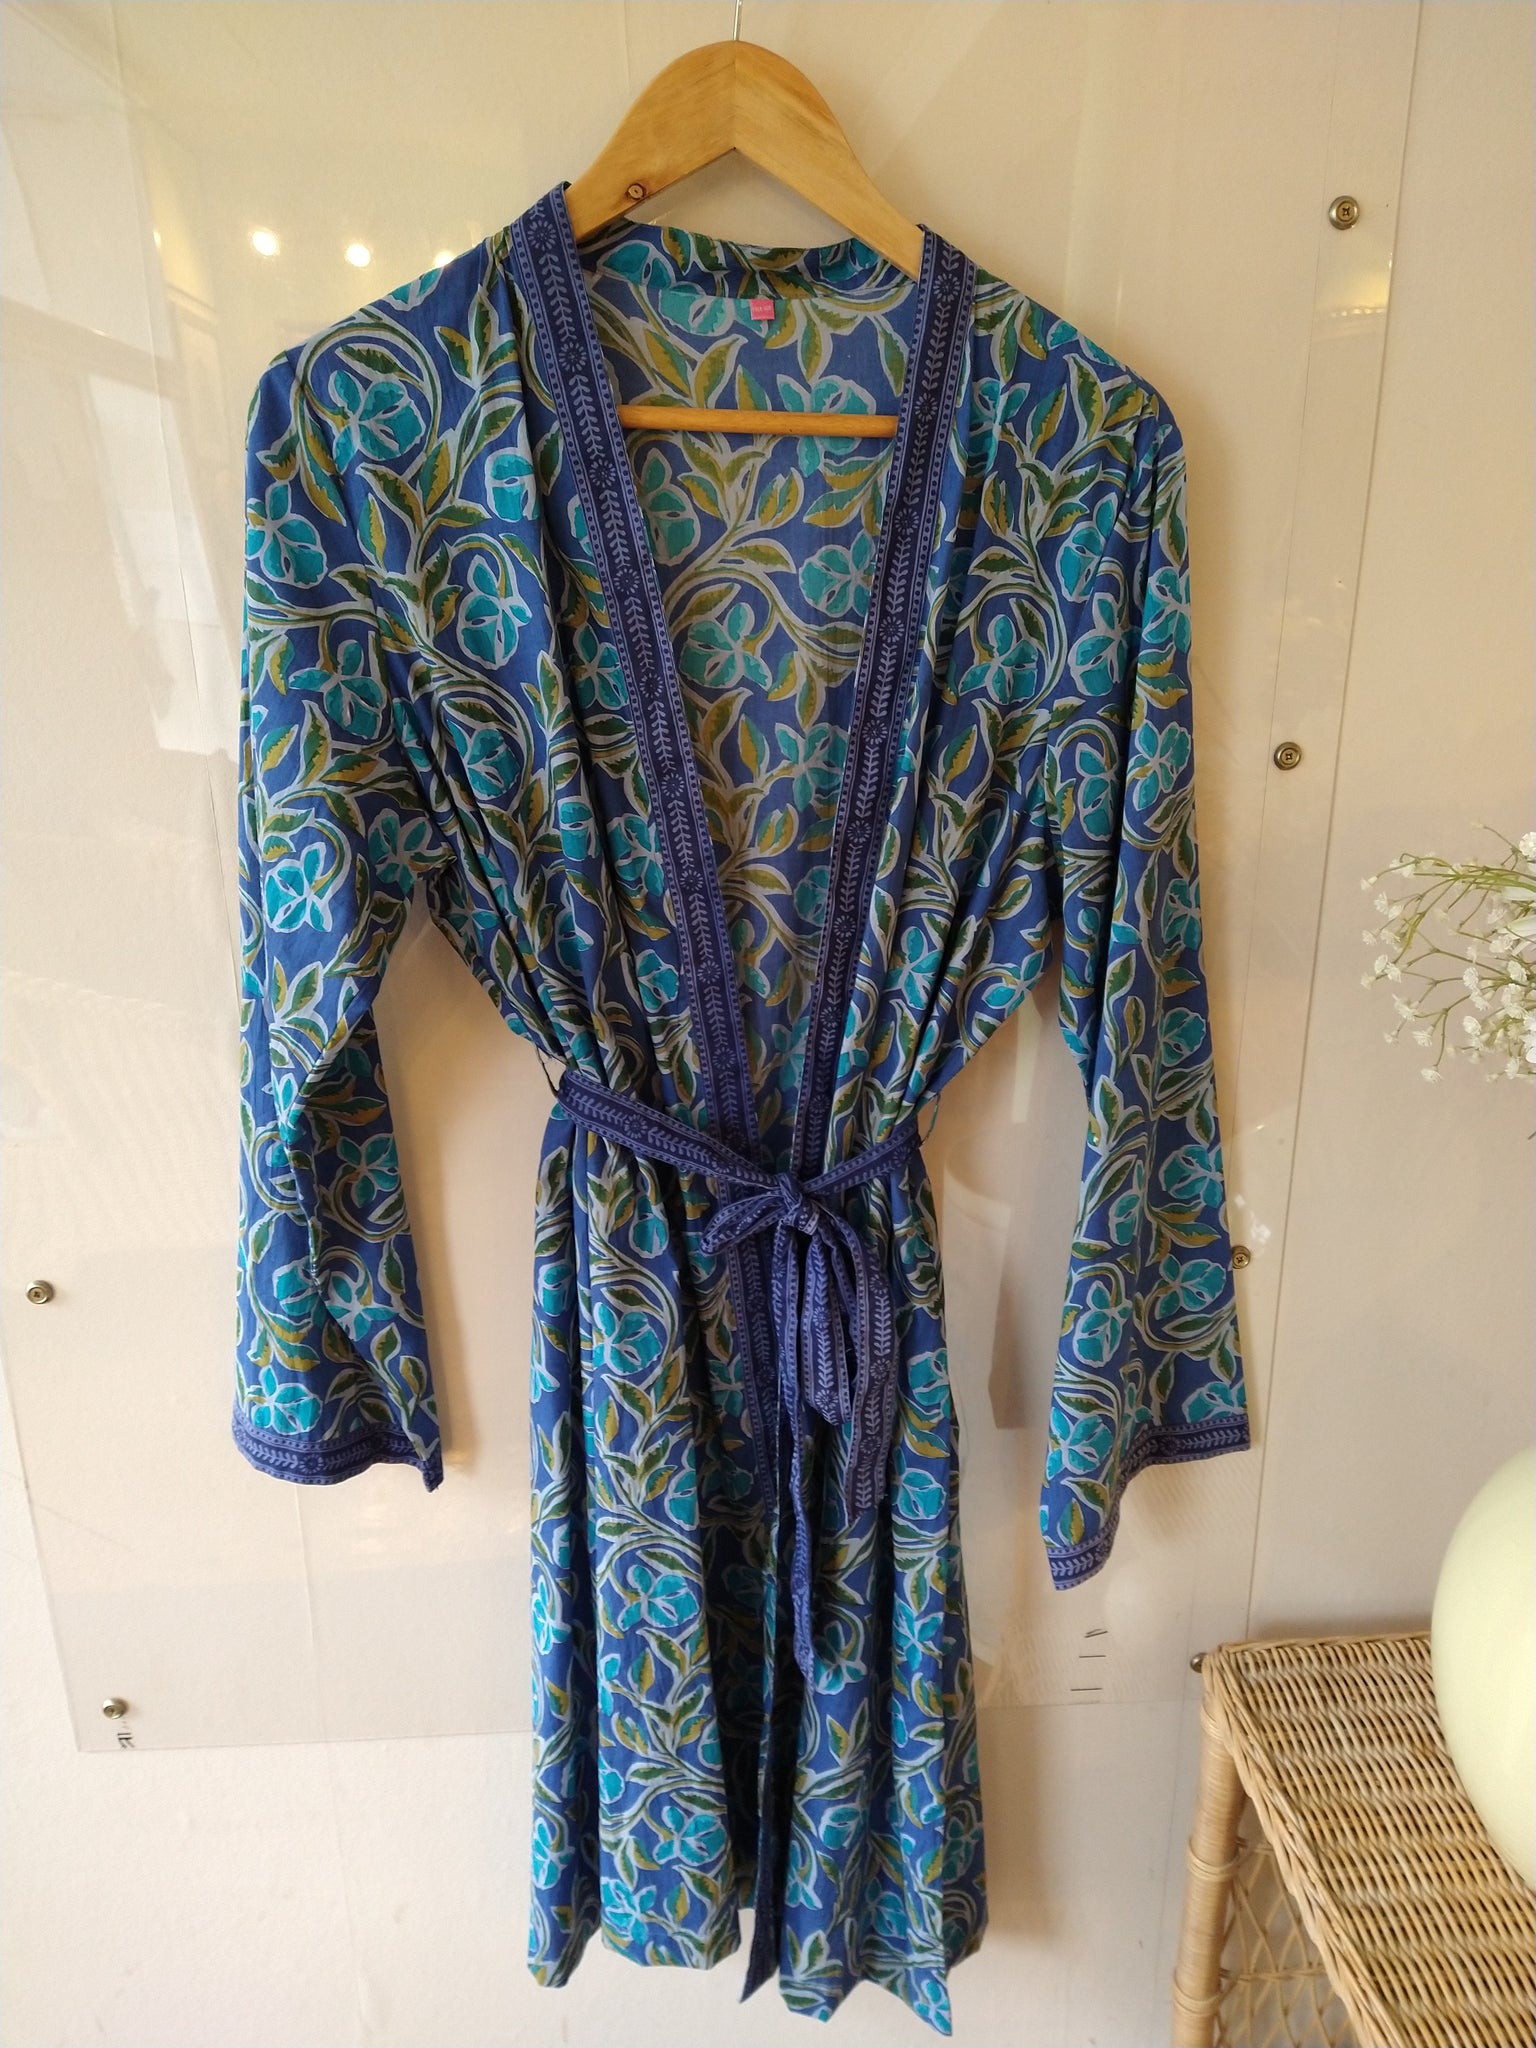 Indian Cotton Kimonos Robes For Women Nightwear bathrobes beach cover up  Kimono Maxi Robes Dresses at Rs 550/piece | Kimono Dress Traditional in  Jaipur | ID: 2851106844233